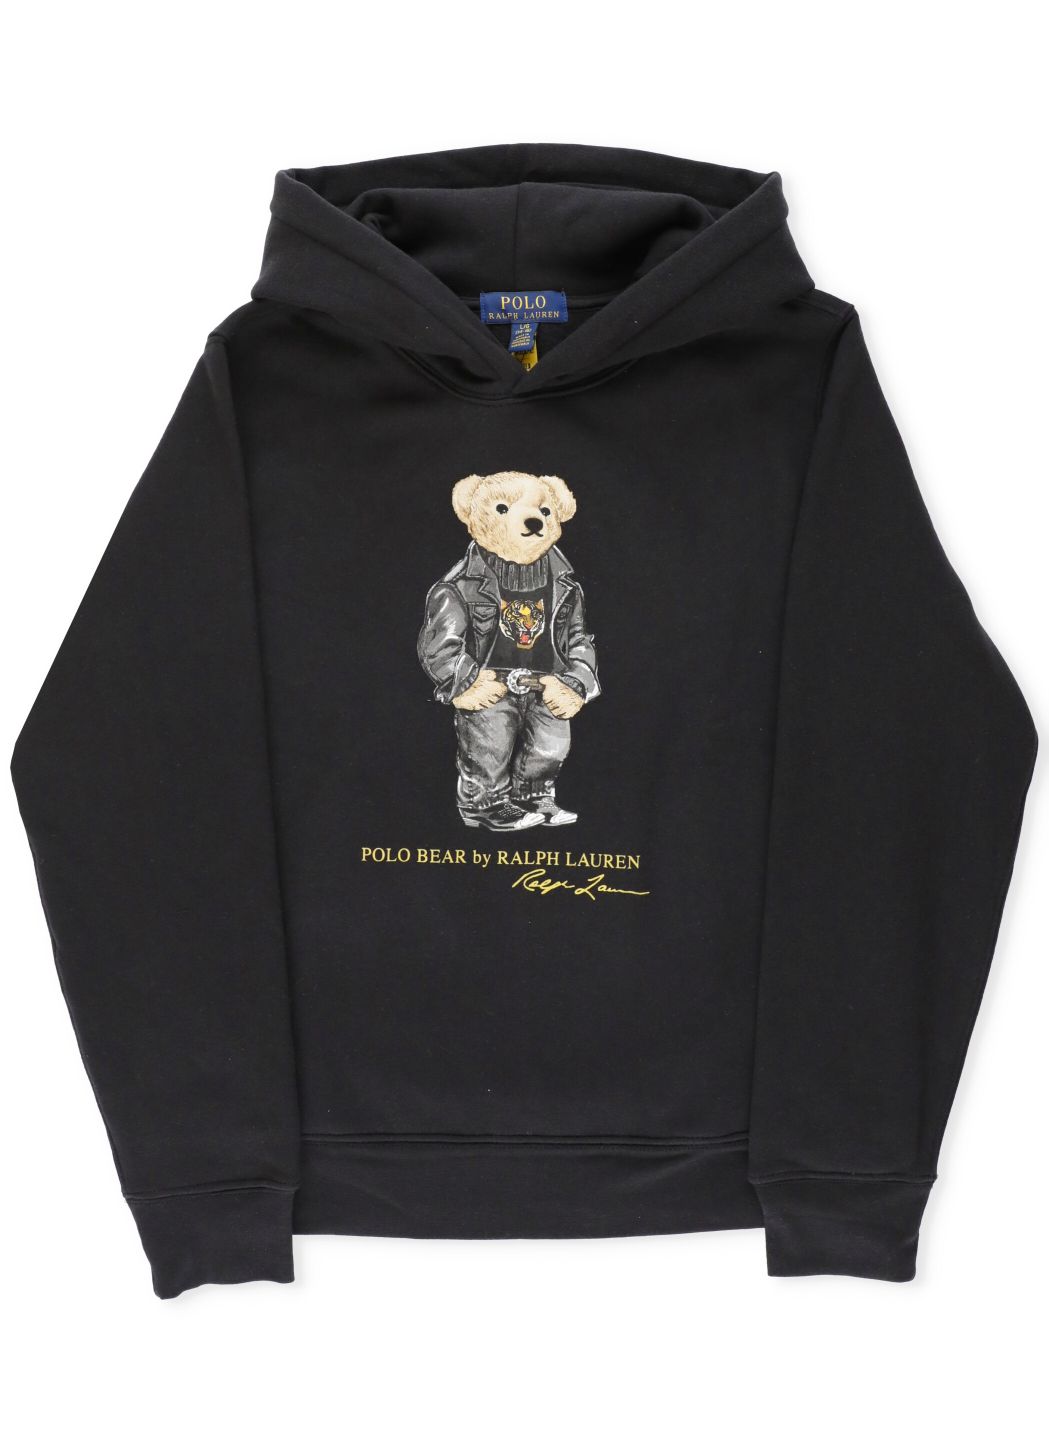 Polo Bear hoodie